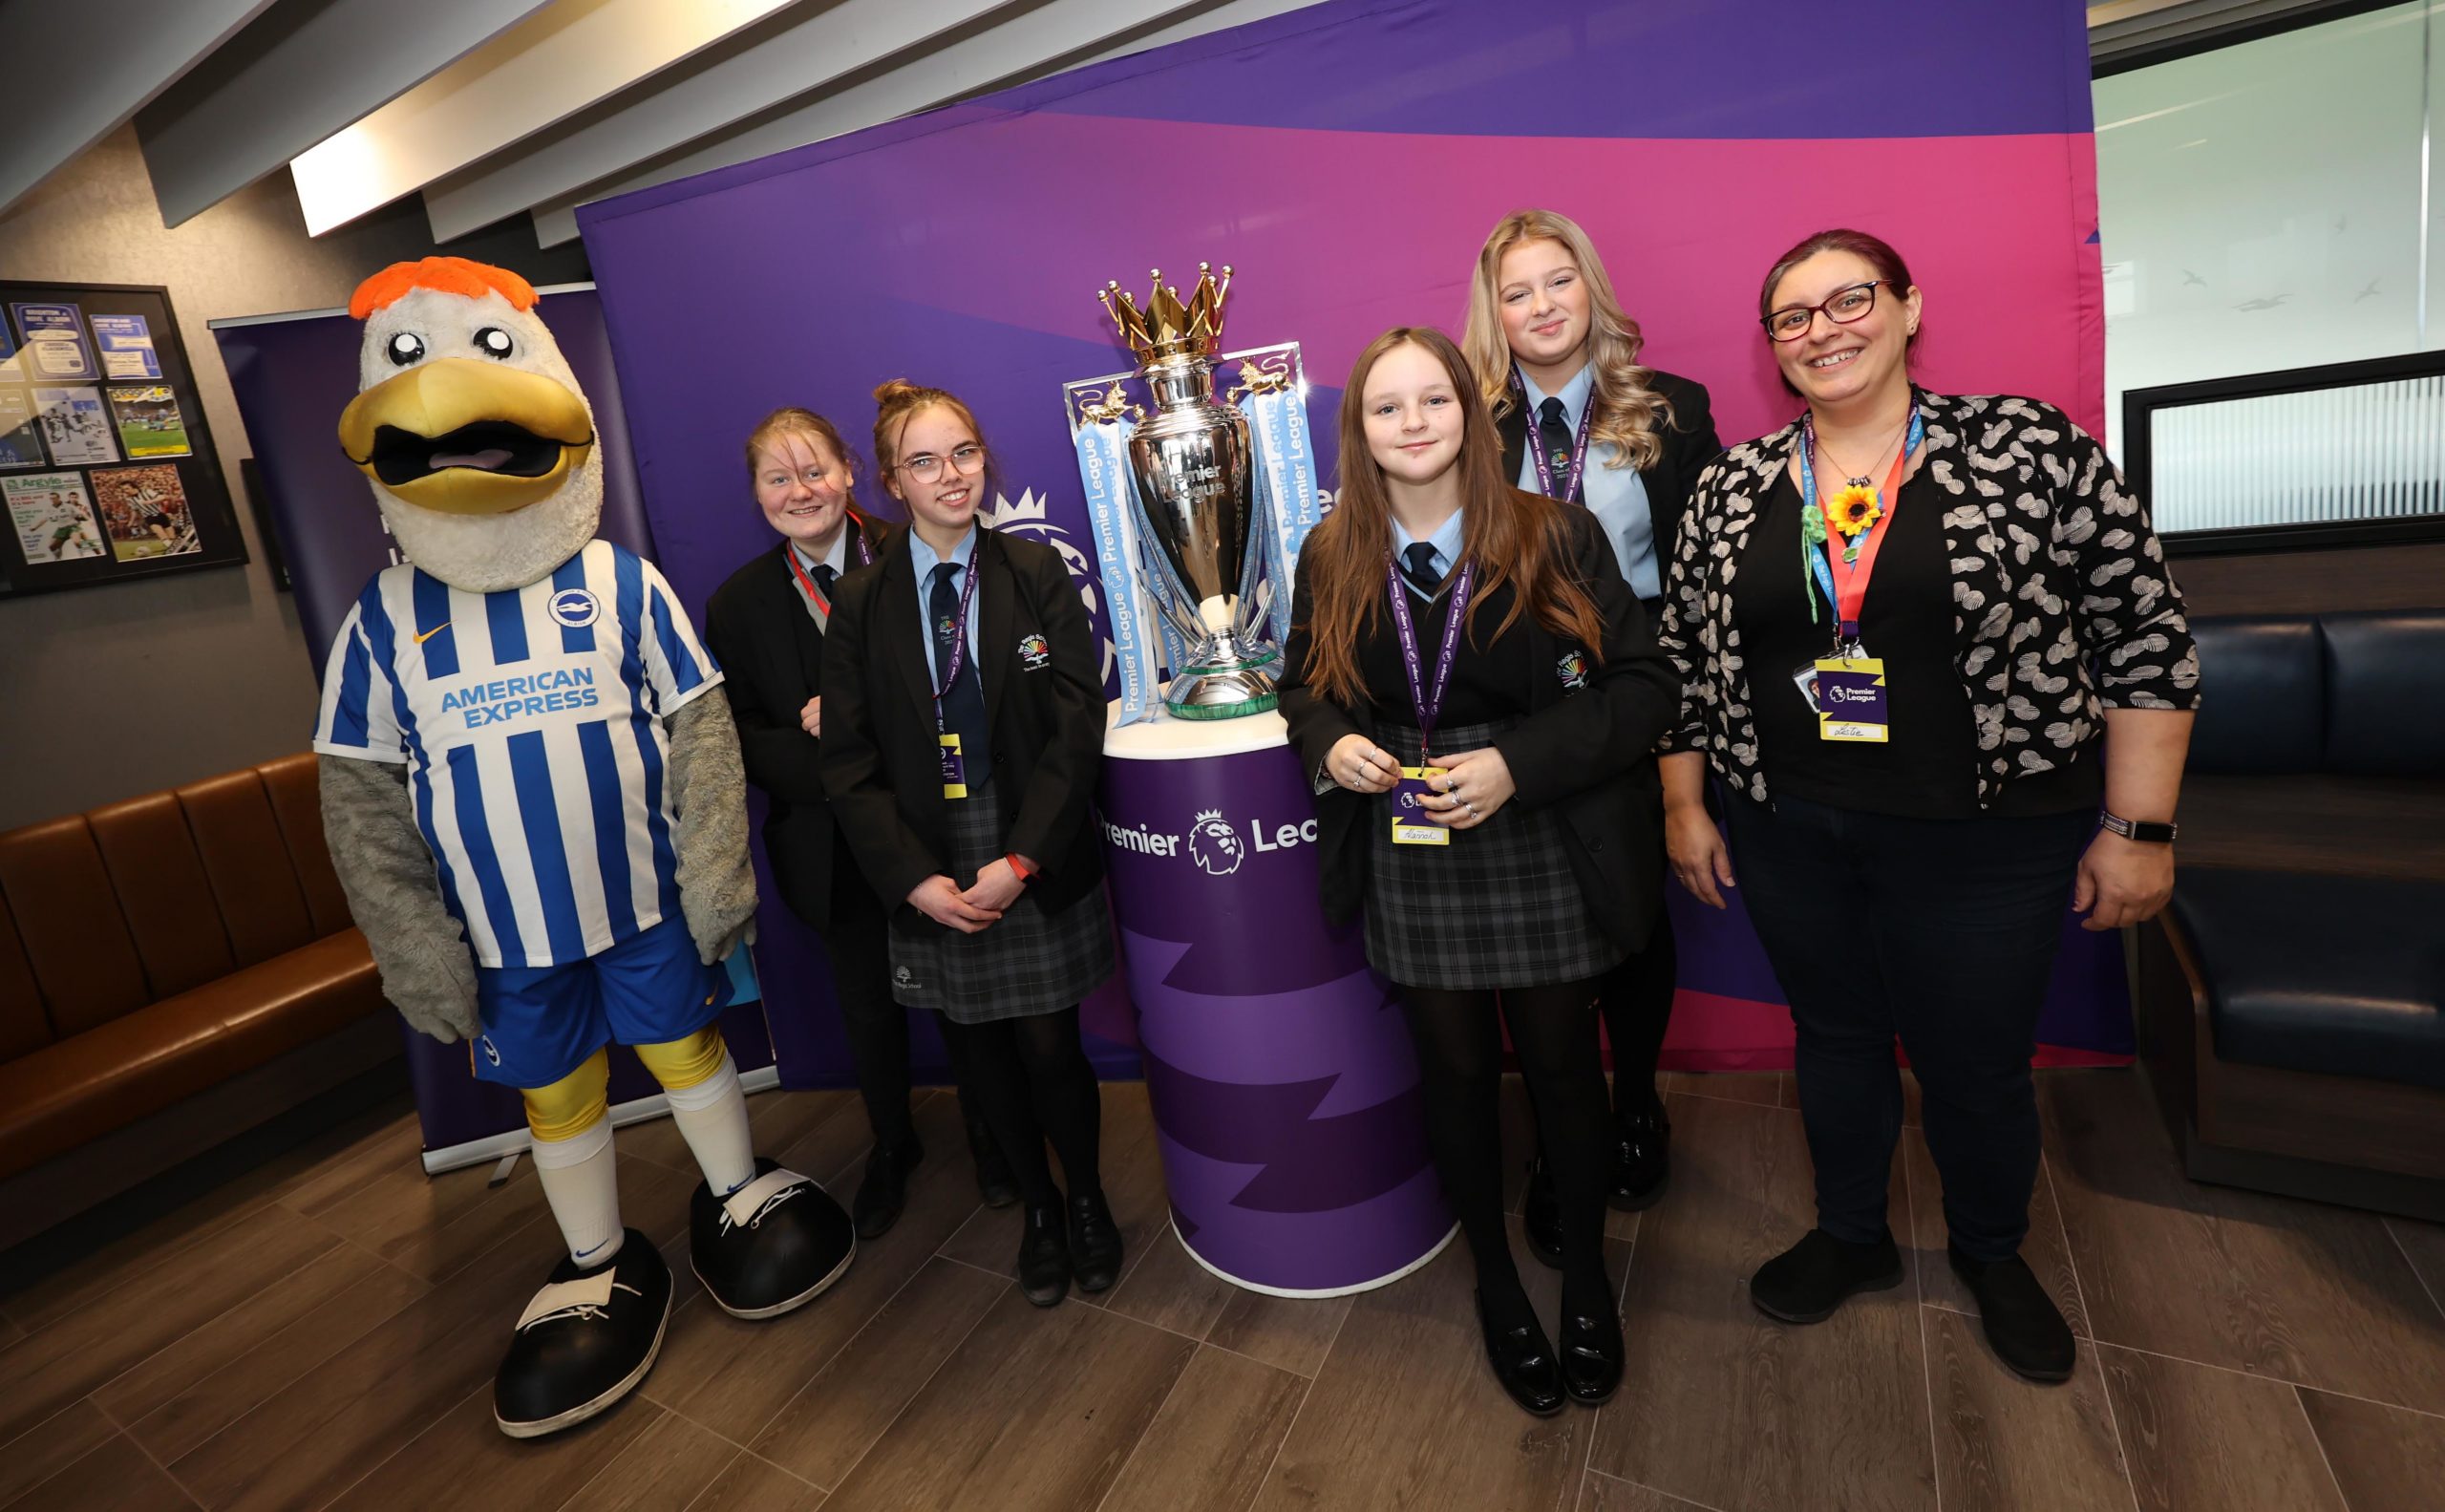 Eight schools visit the Amex for Premier League Inspires event